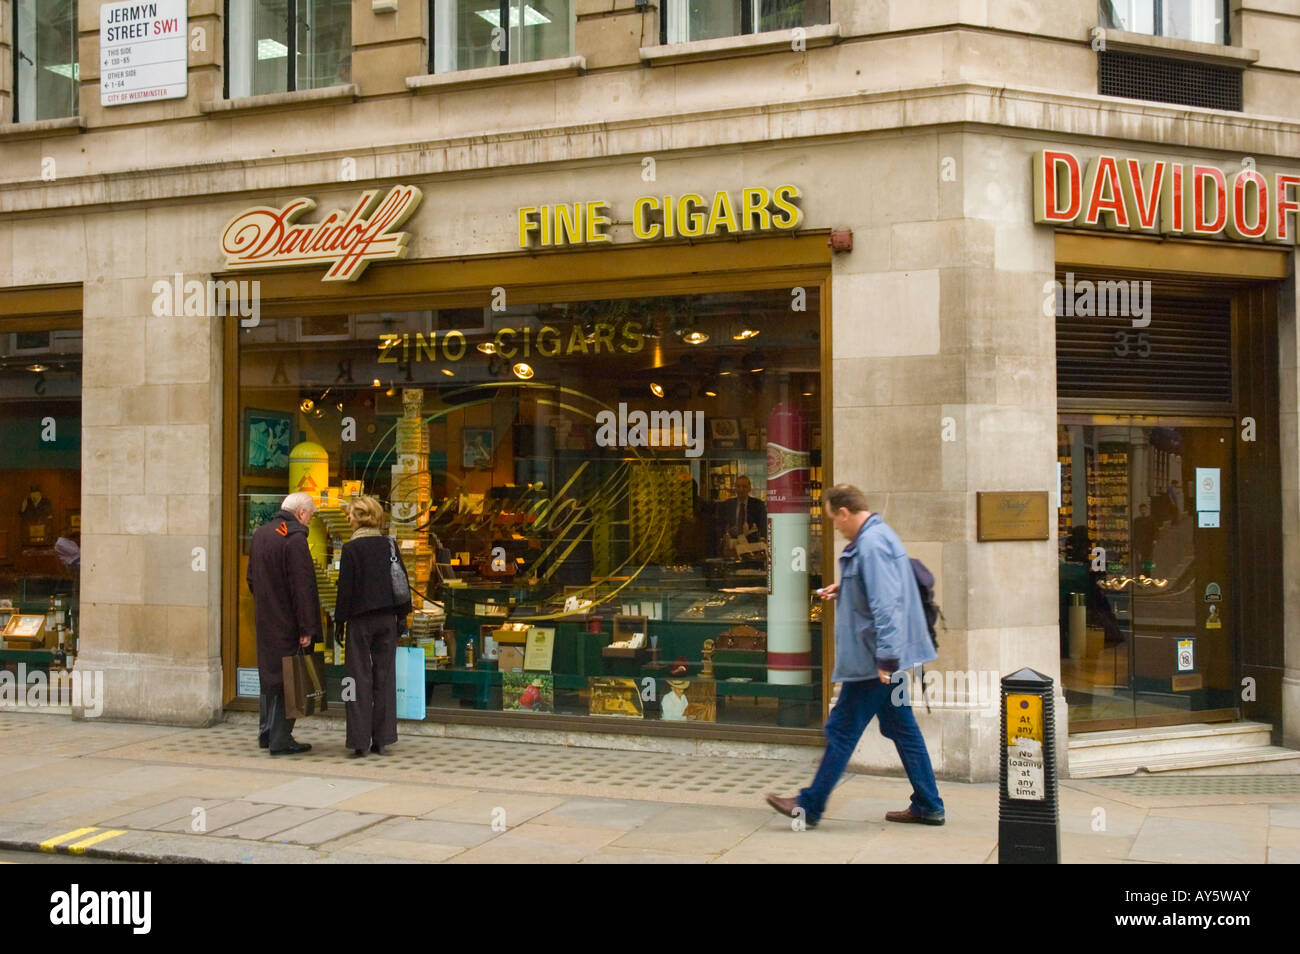 Davidoff tobacco shop in Jermyn Street in London UK Stock Photo - Alamy